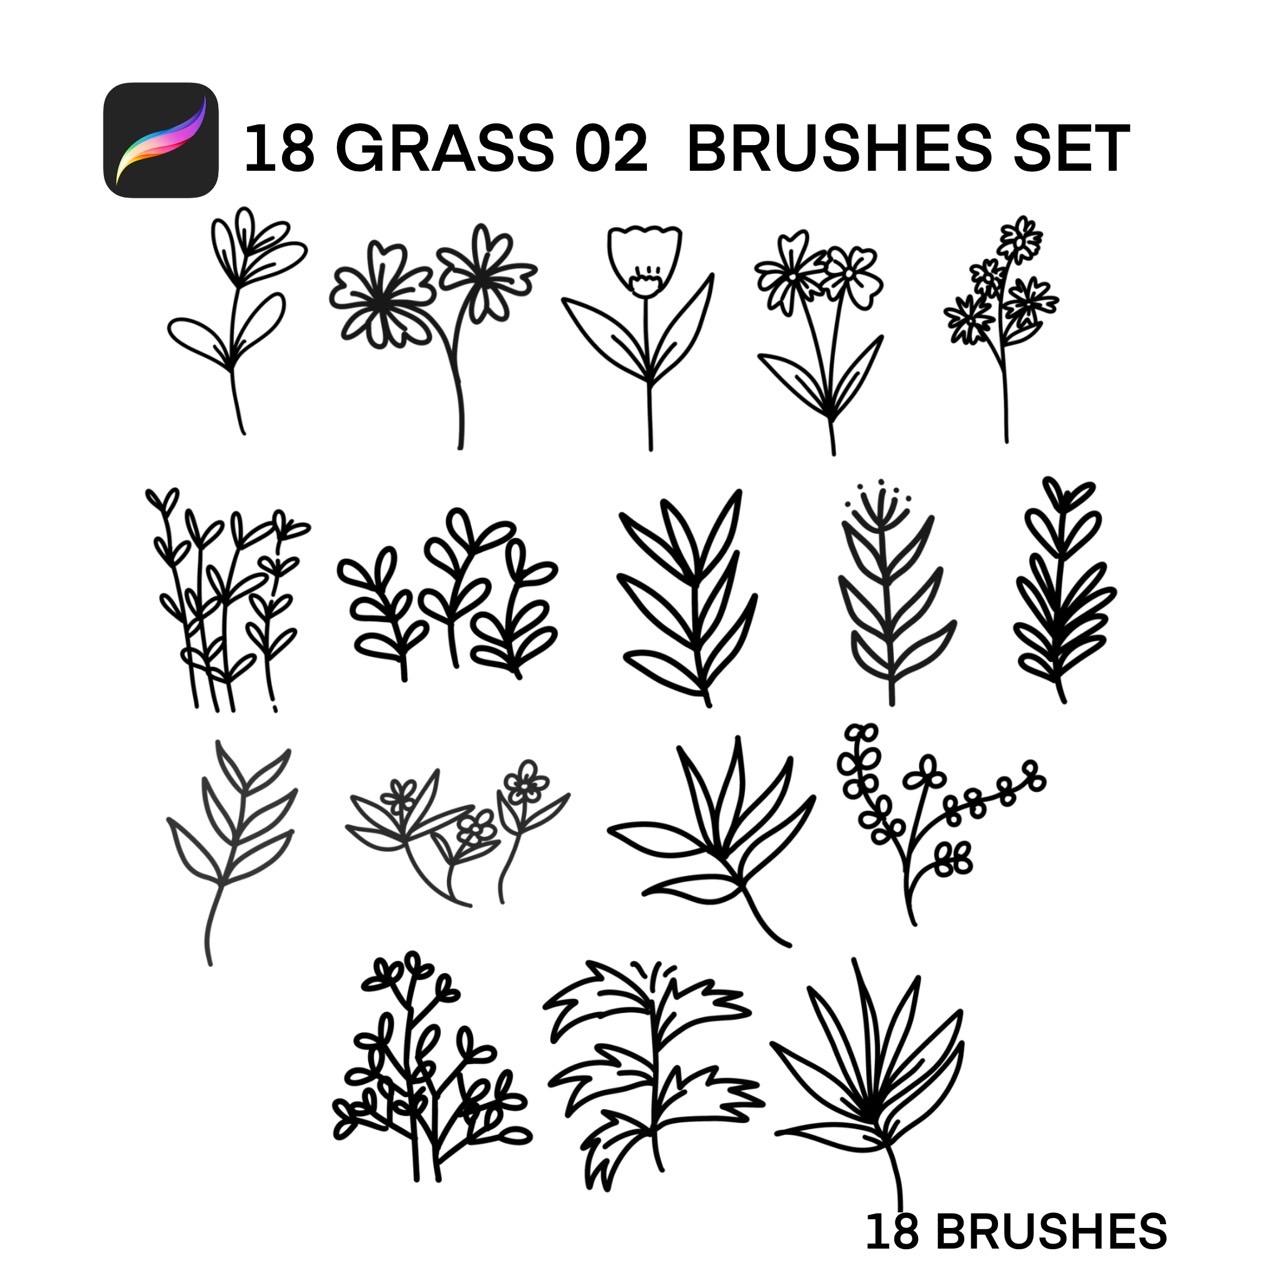 18 GRASS 02 BRUSHES SET